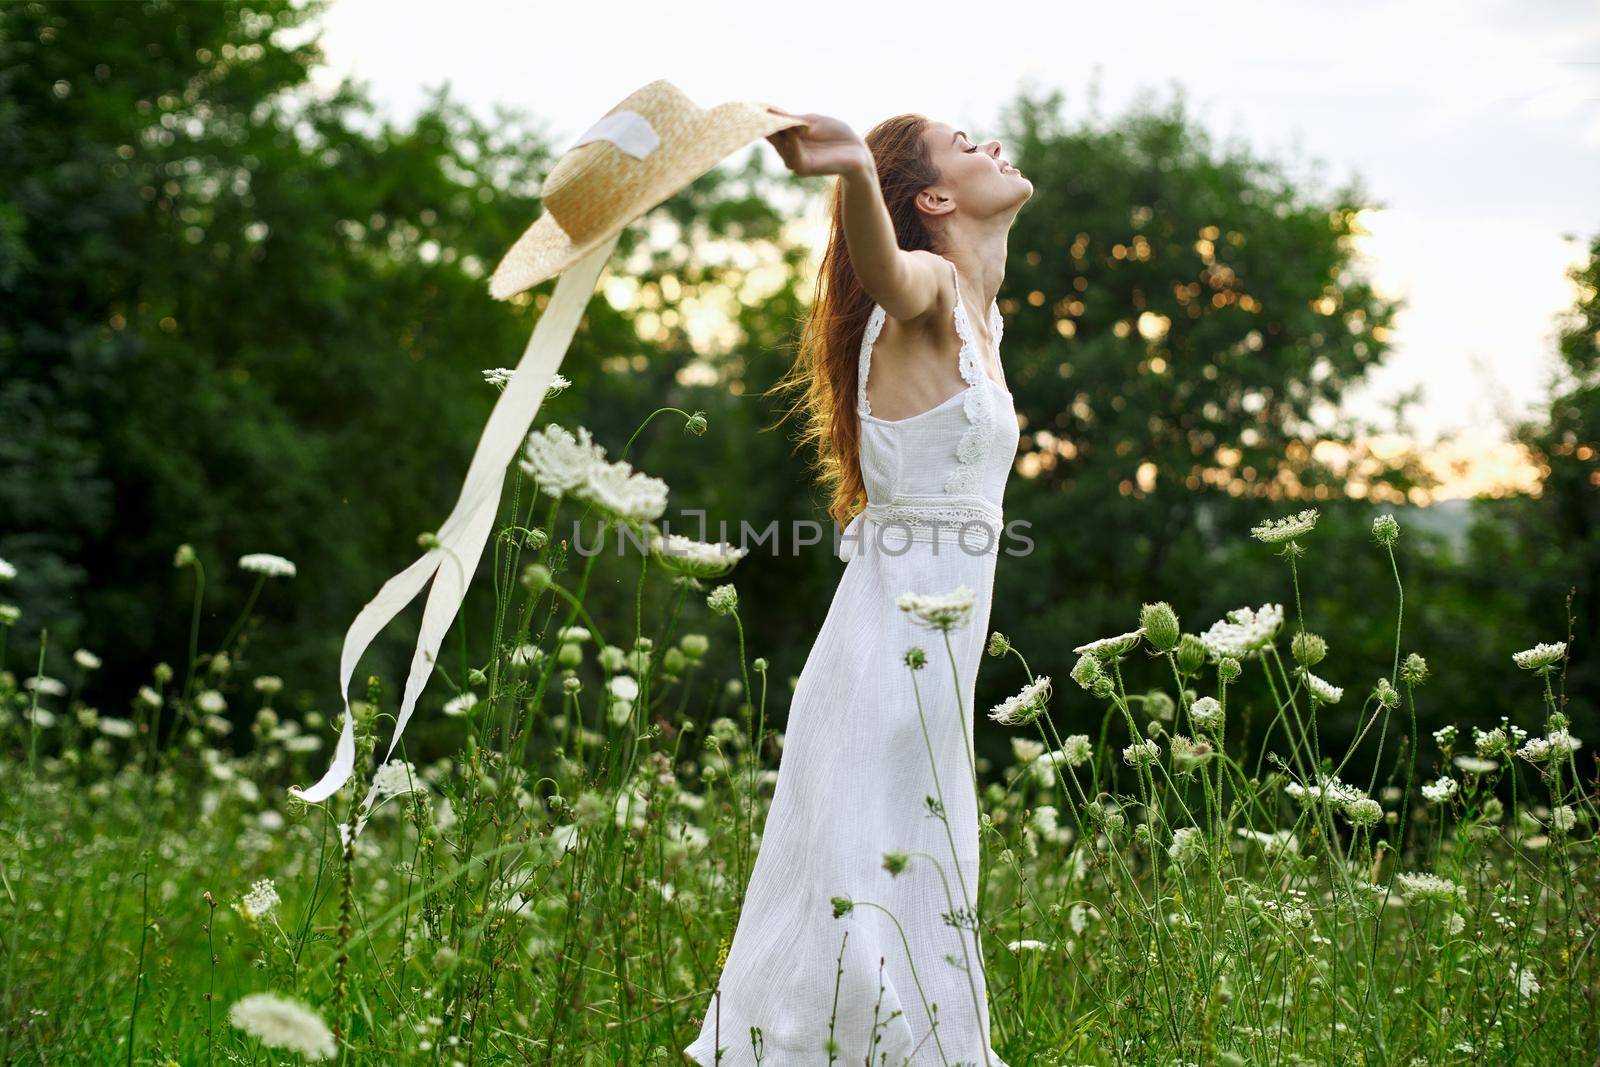 Woman in white dress flowers freedom walk fresh air. High quality photo